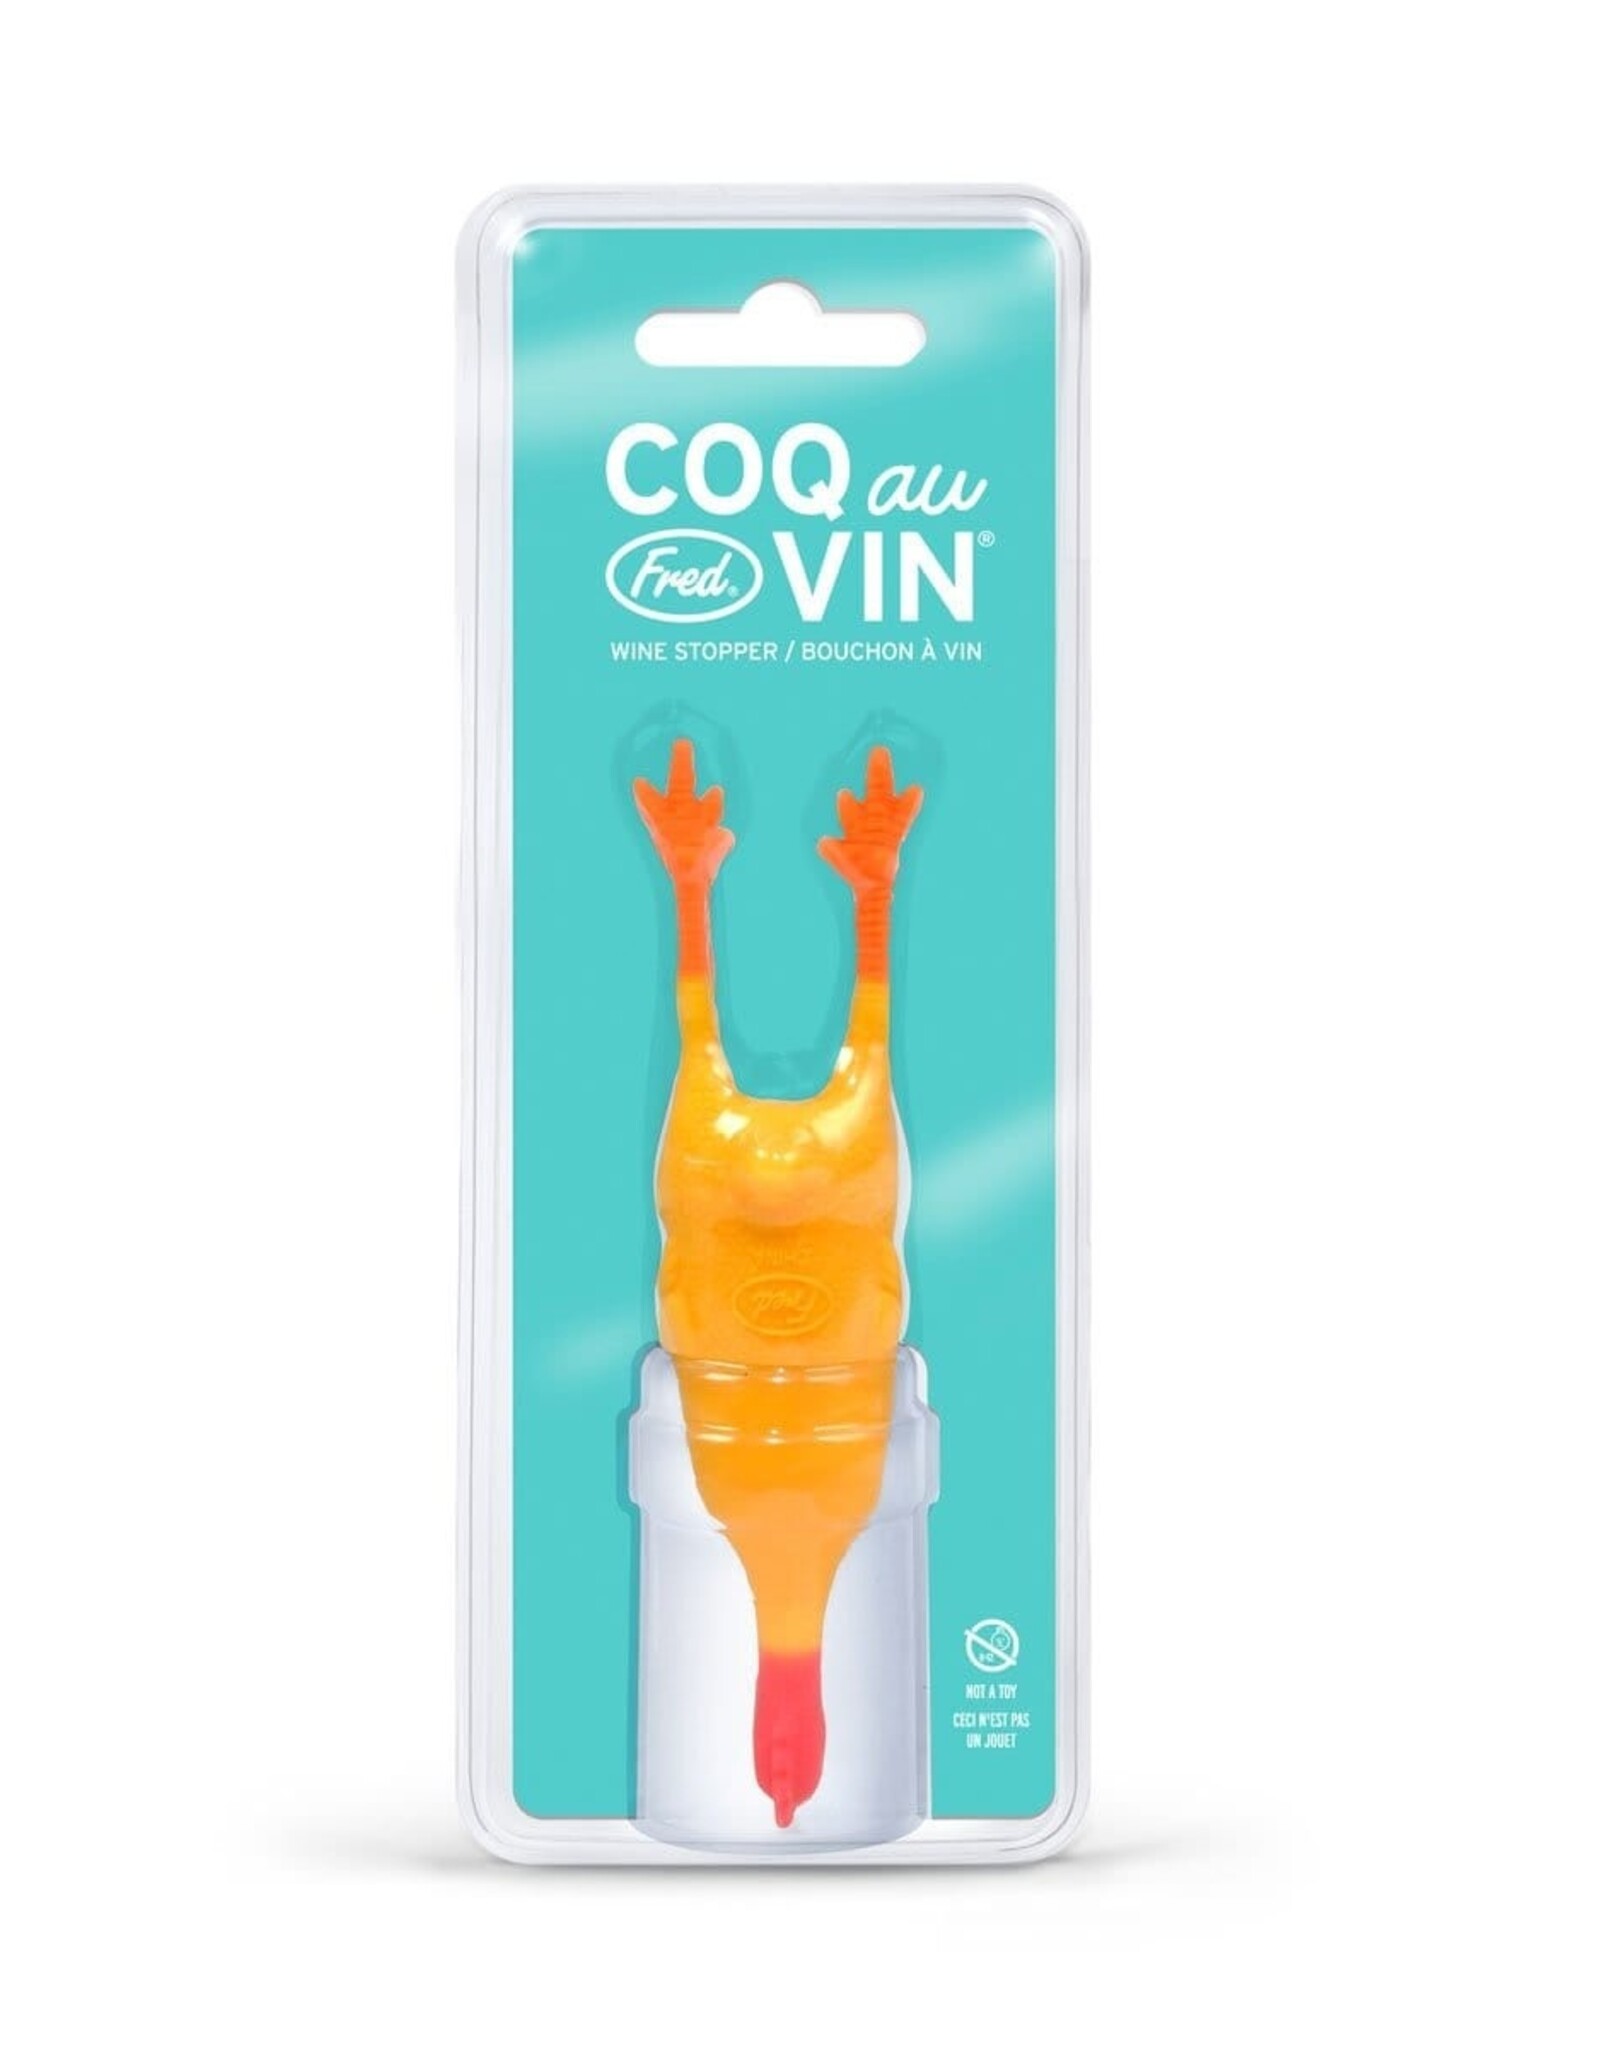 Coq au Vin - Wine Stopper